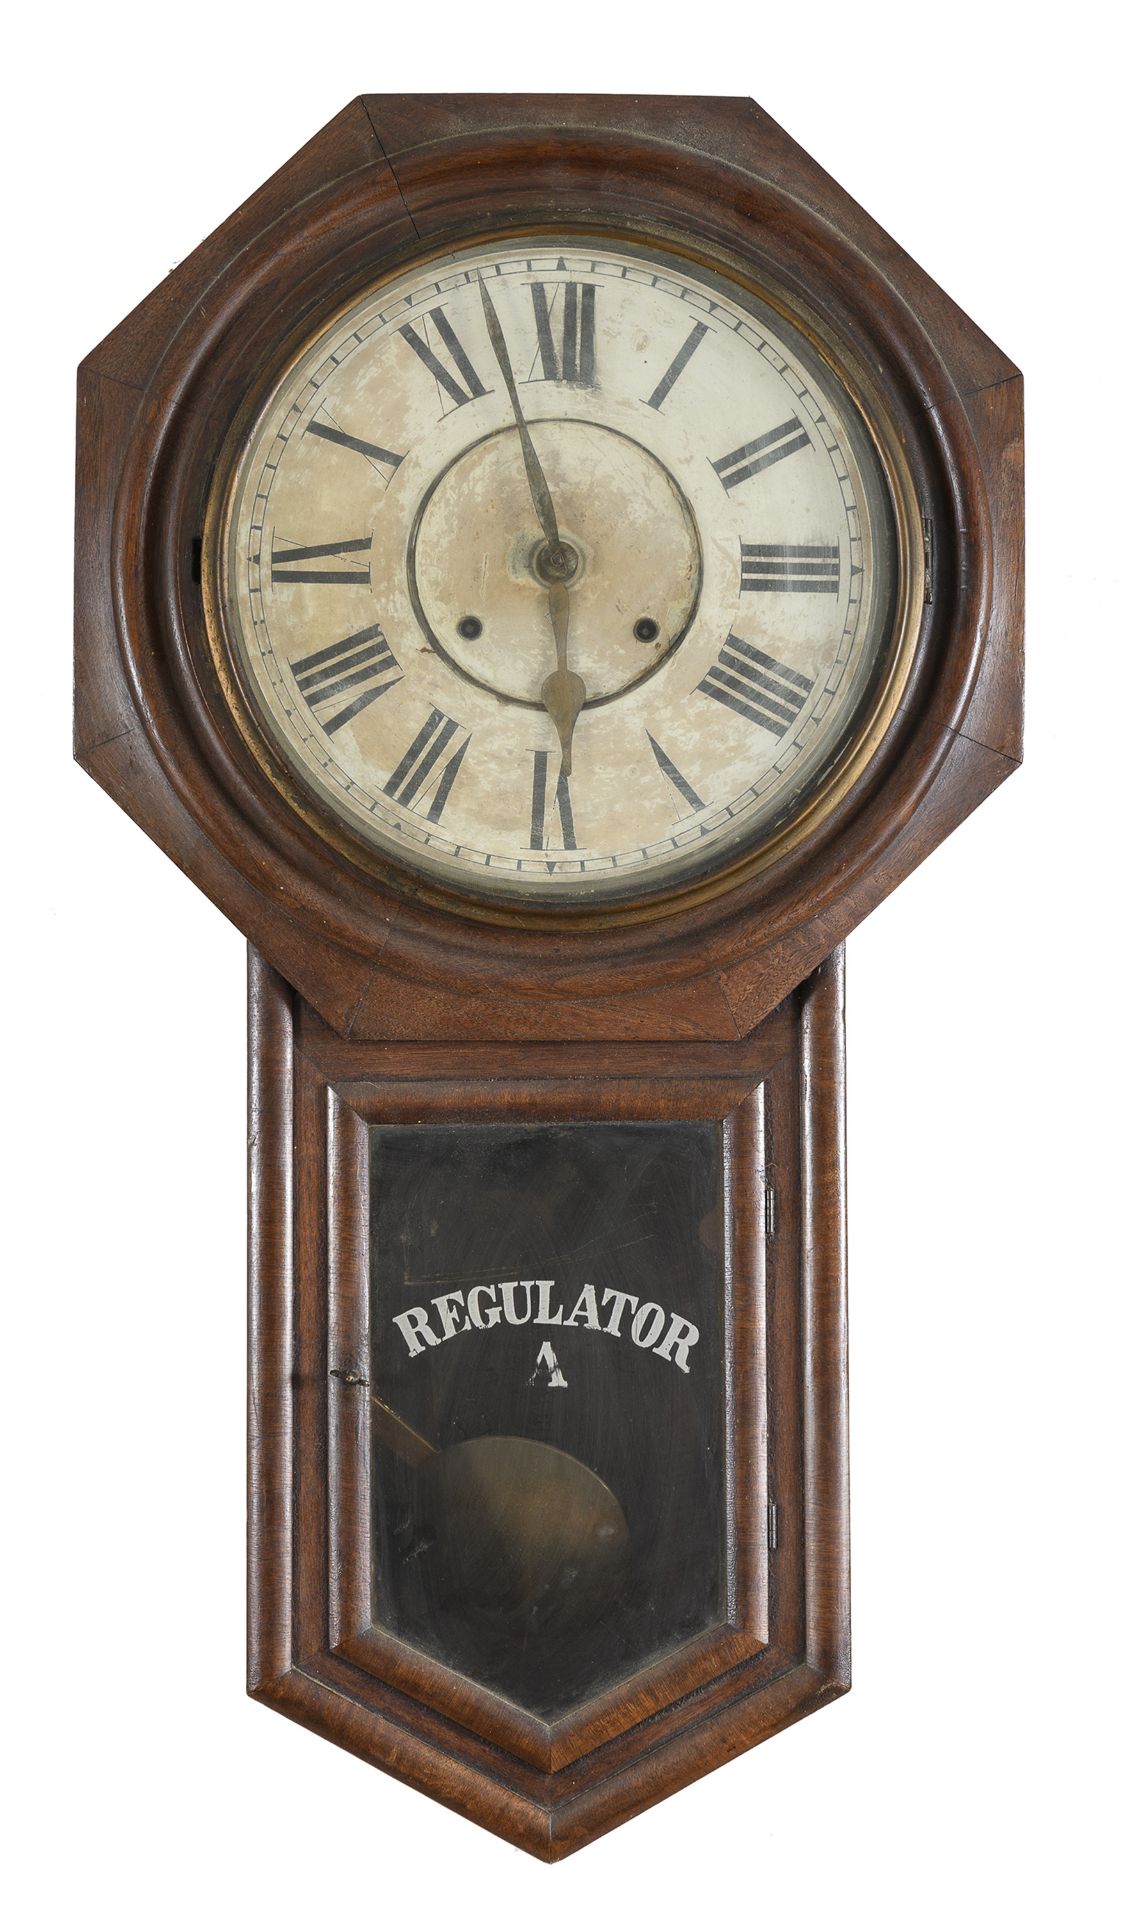 WALL REGULATOR CLOCK UNITED STATES LATE 19TH CENTURY